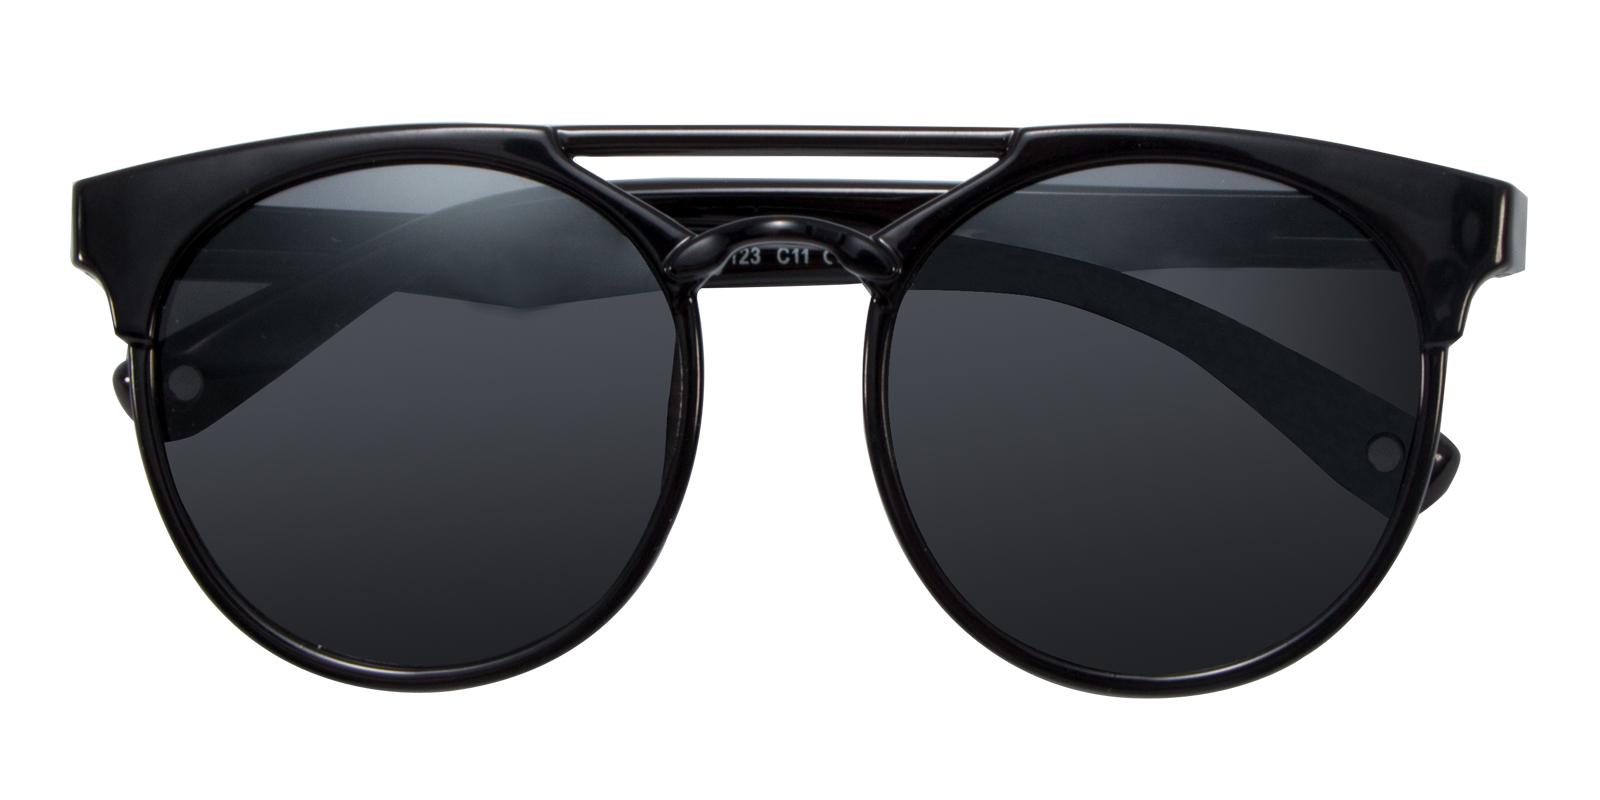 Norbter Black TR Sunglasses , UniversalBridgeFit Frames from ABBE Glasses